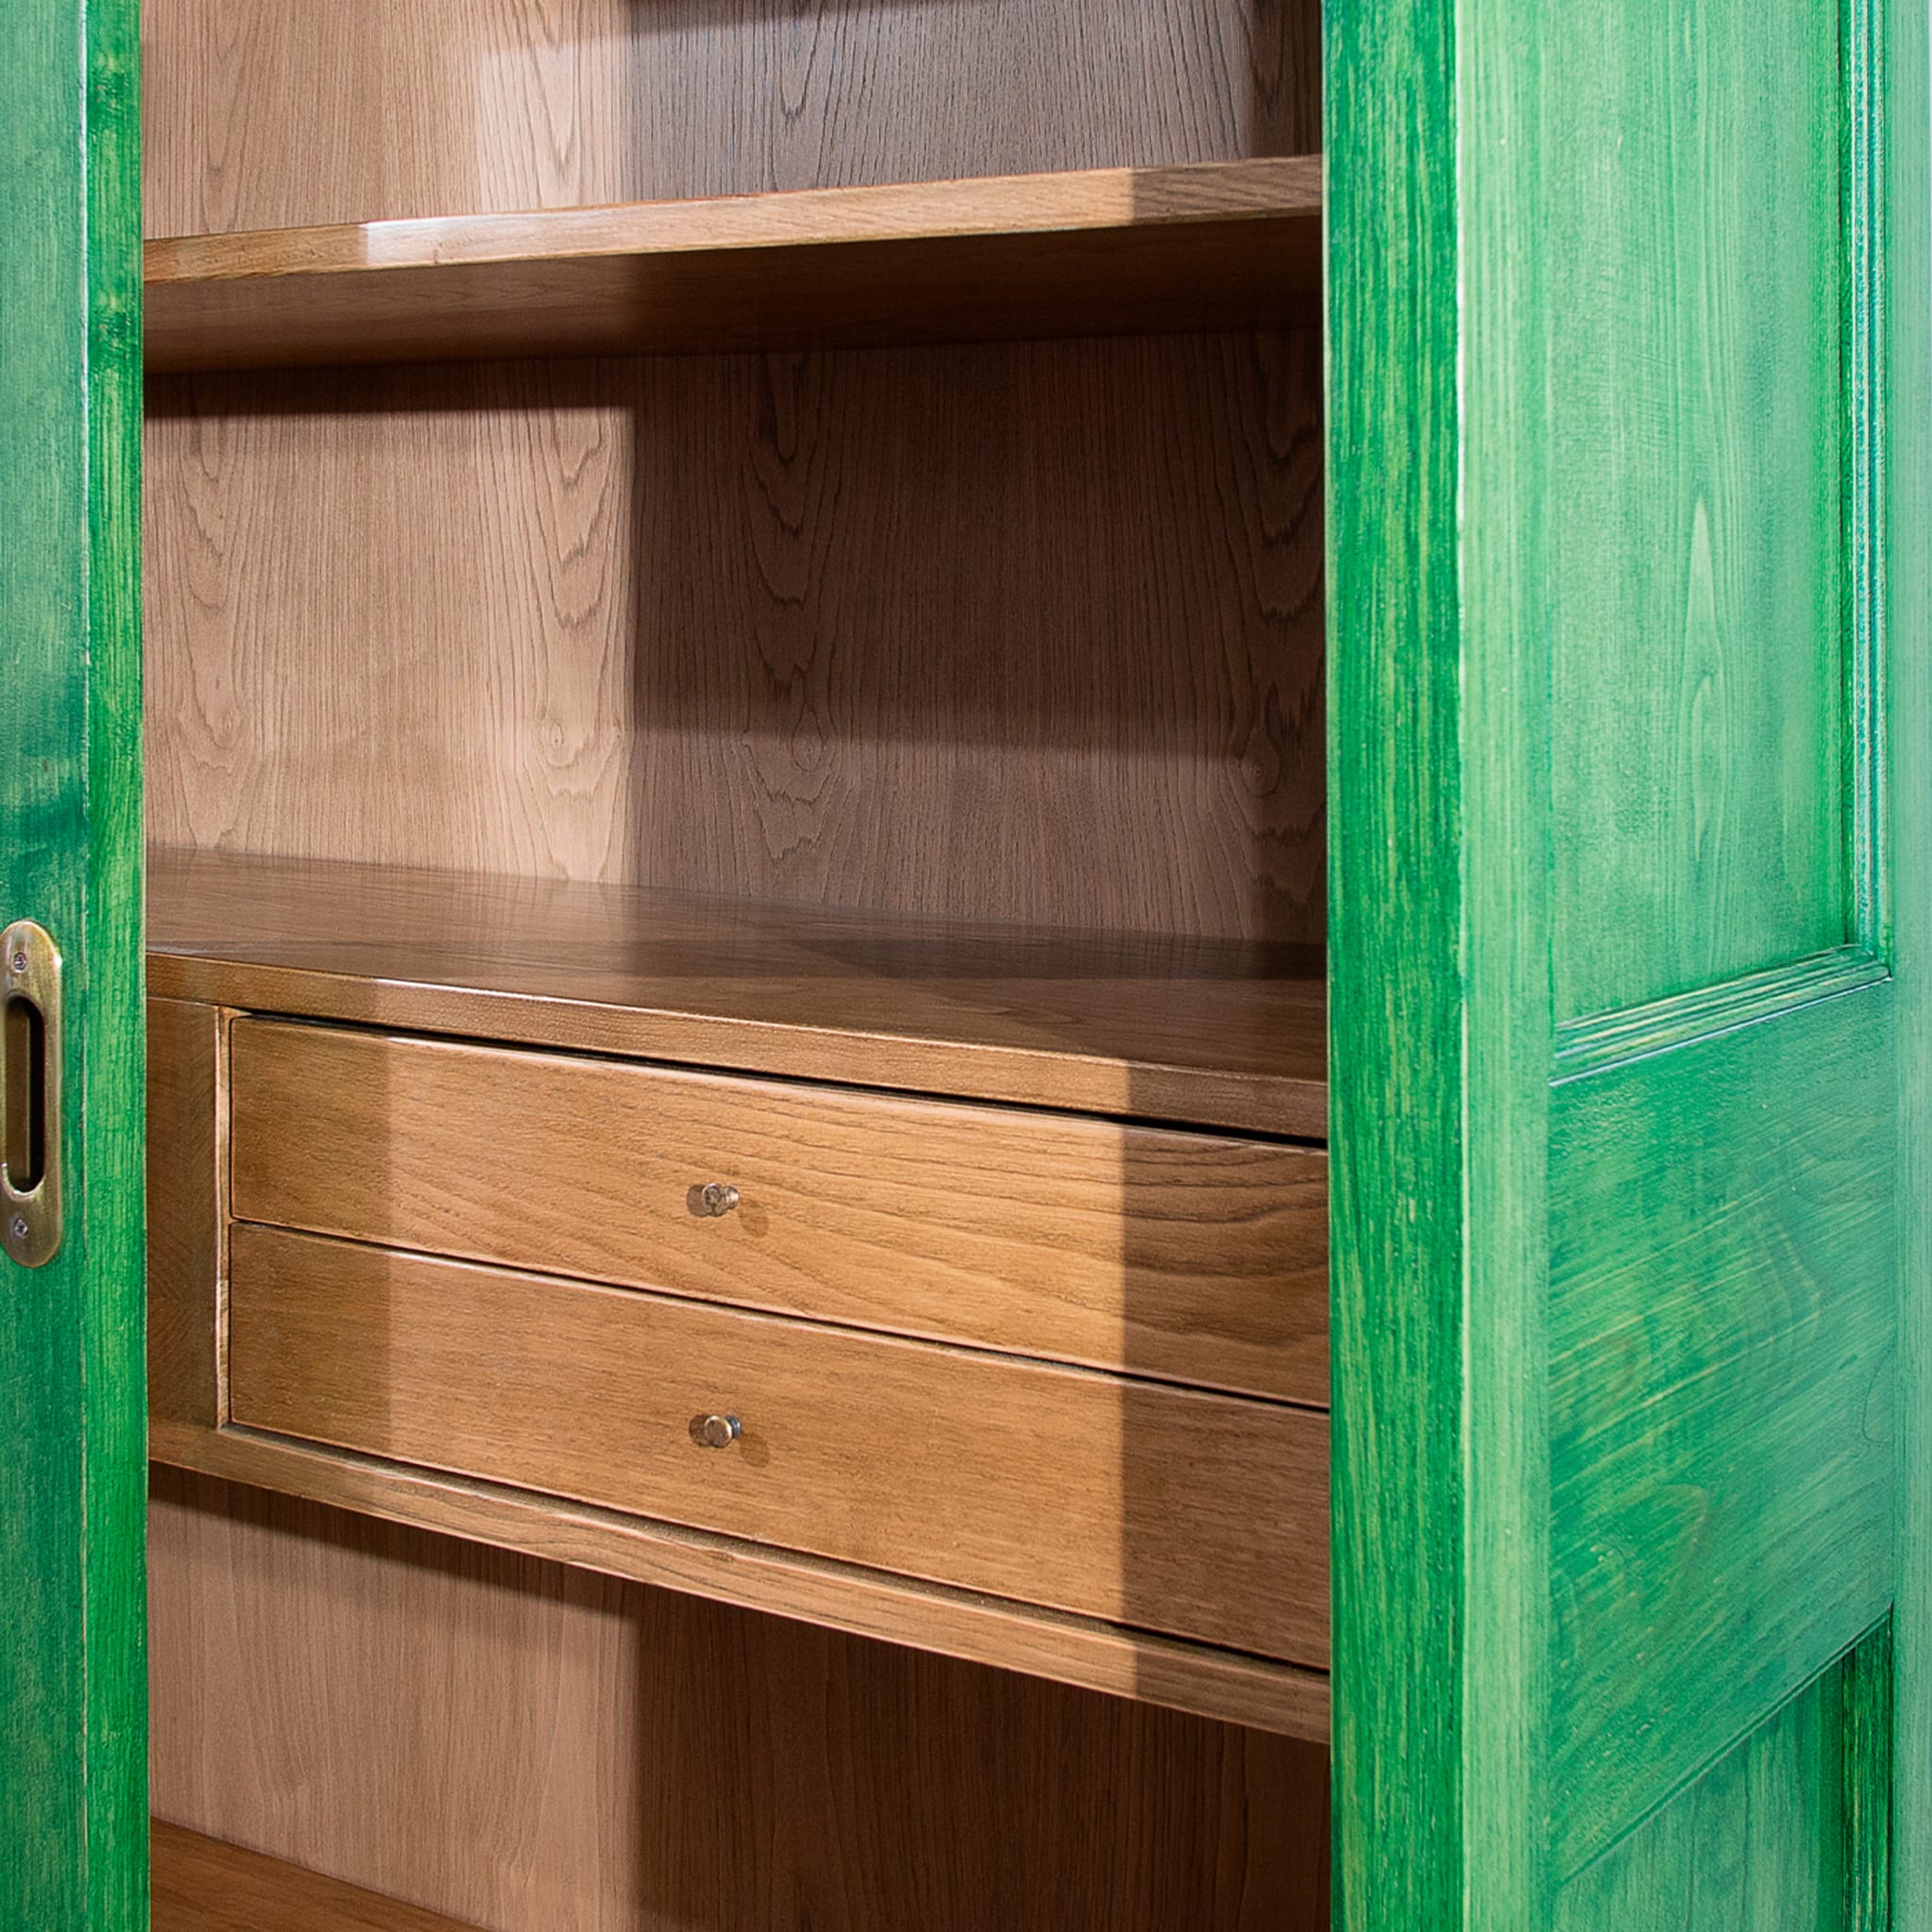 Green Sliding Doors Bookshelf #1 - Alternative view 2